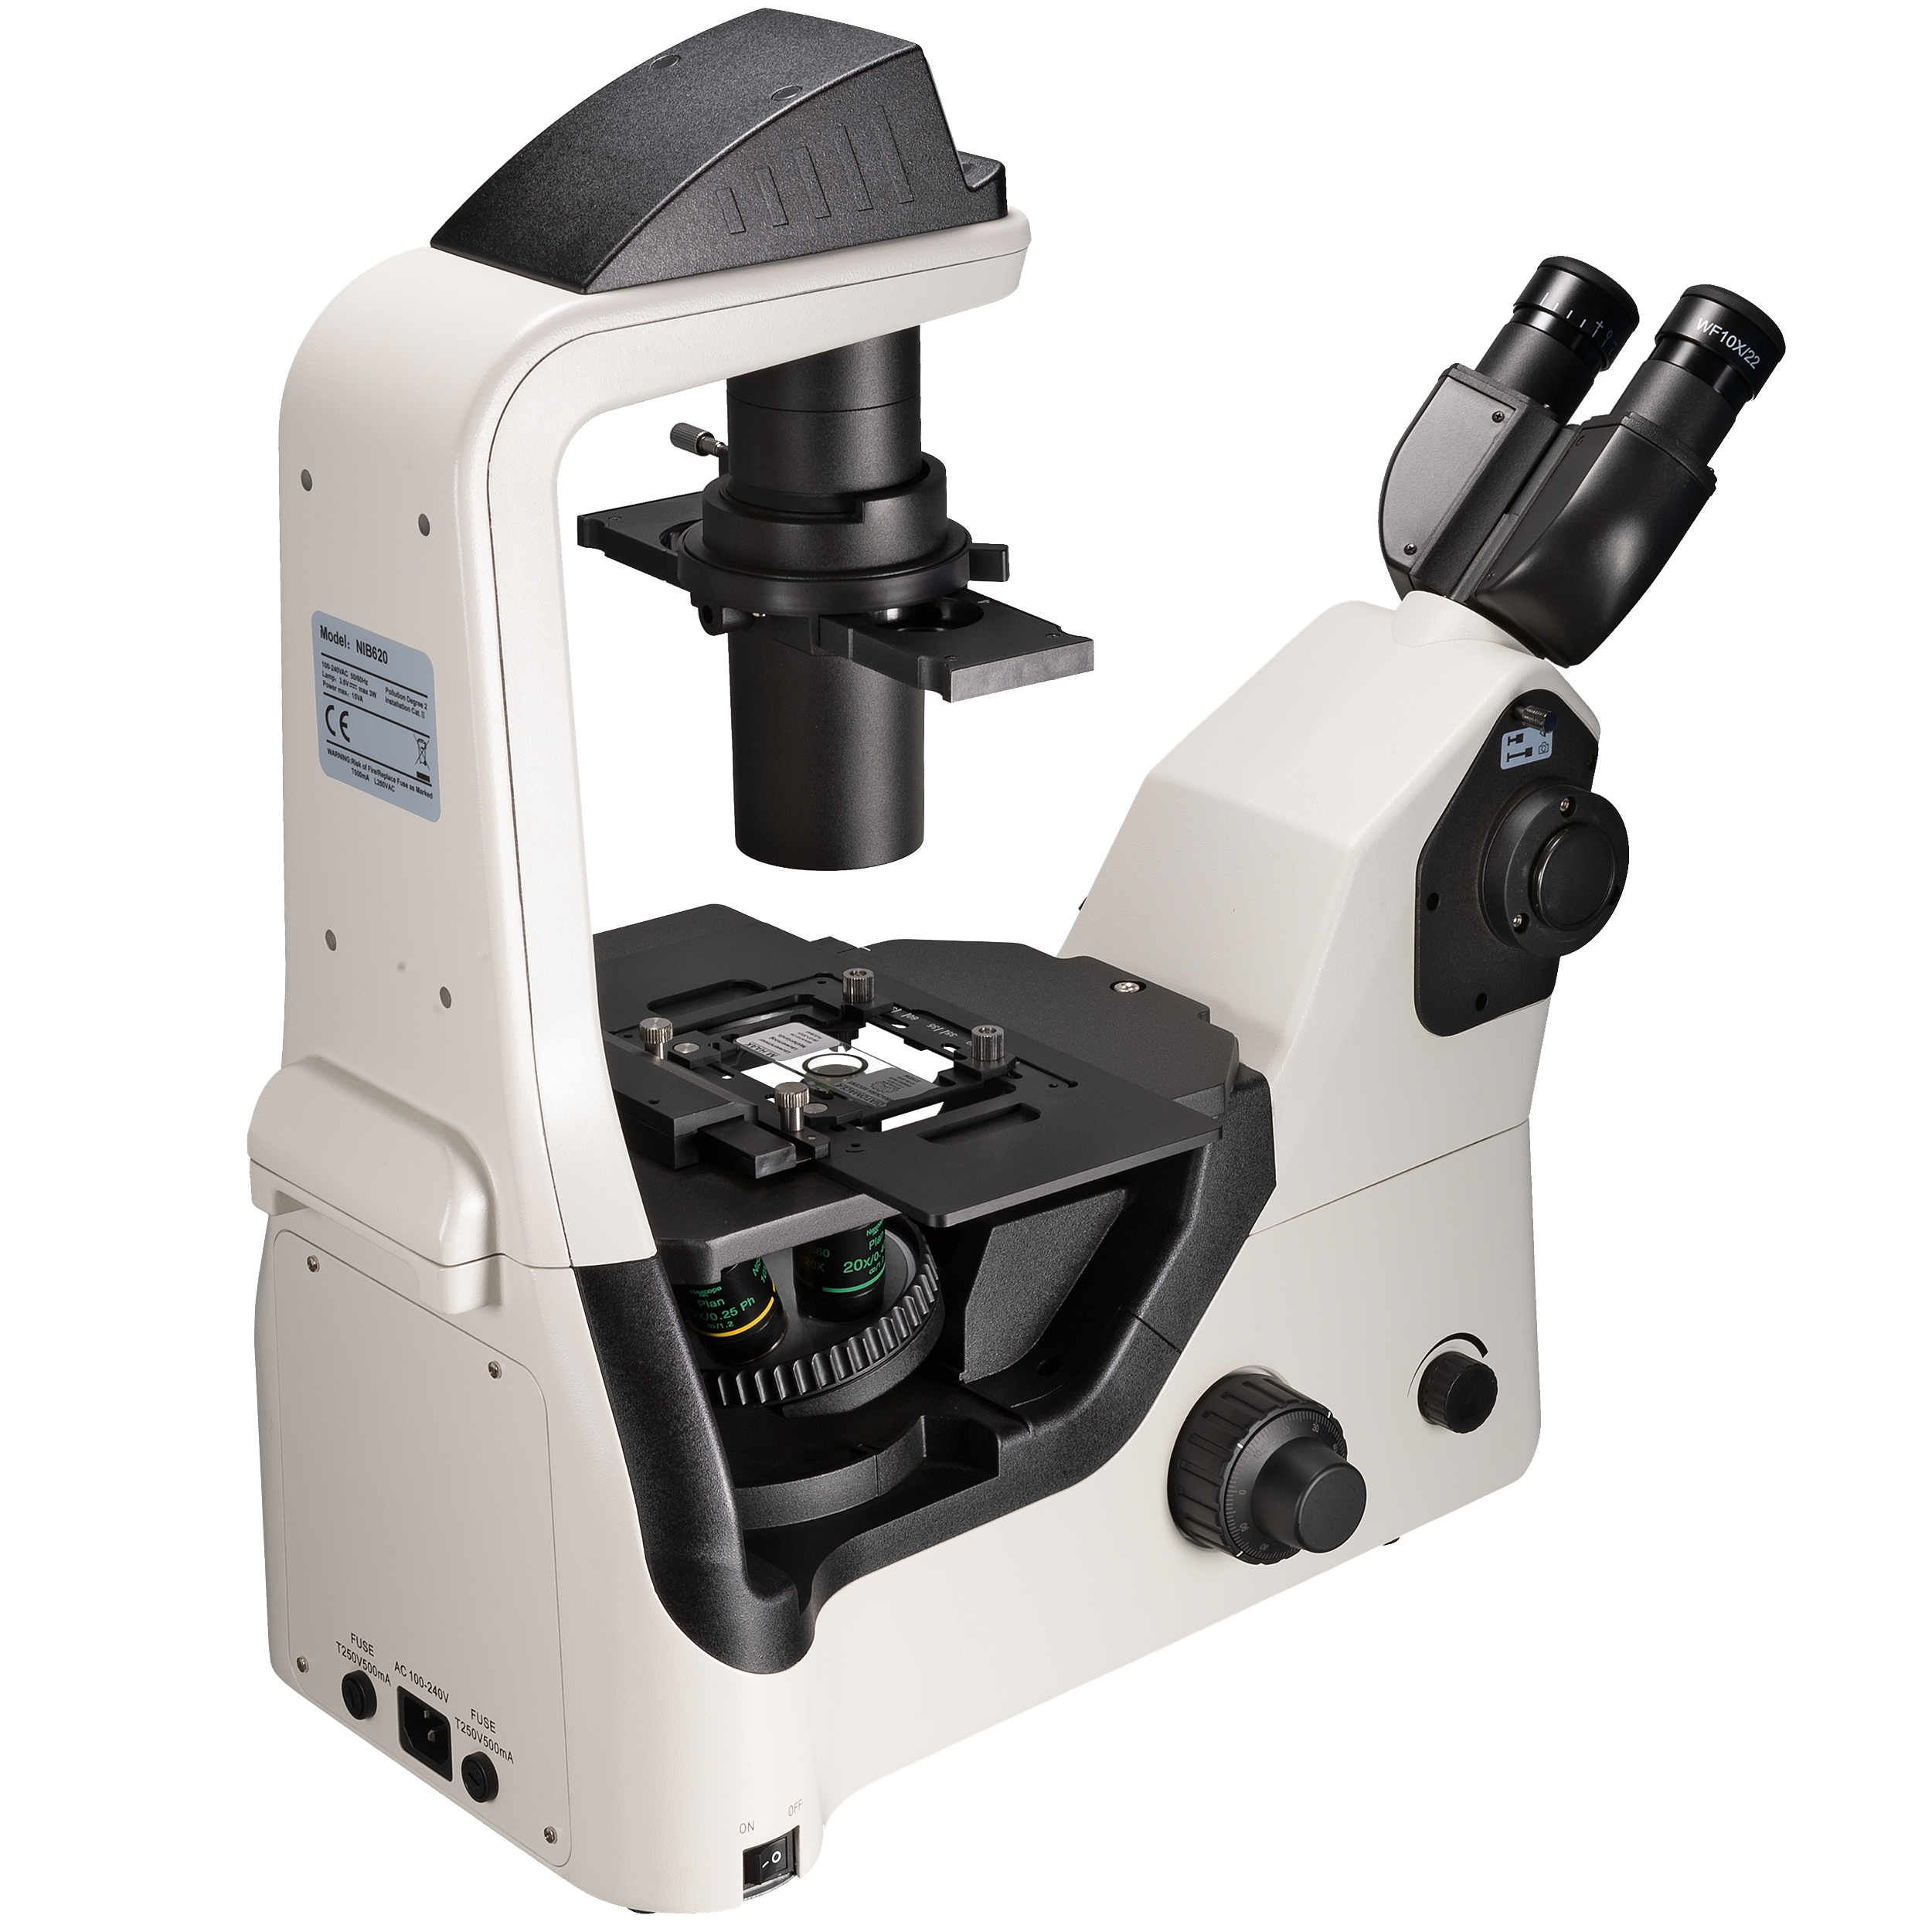 Nexcope NIB620 microscope de laboratoire inversé professionnel à contraste de phase